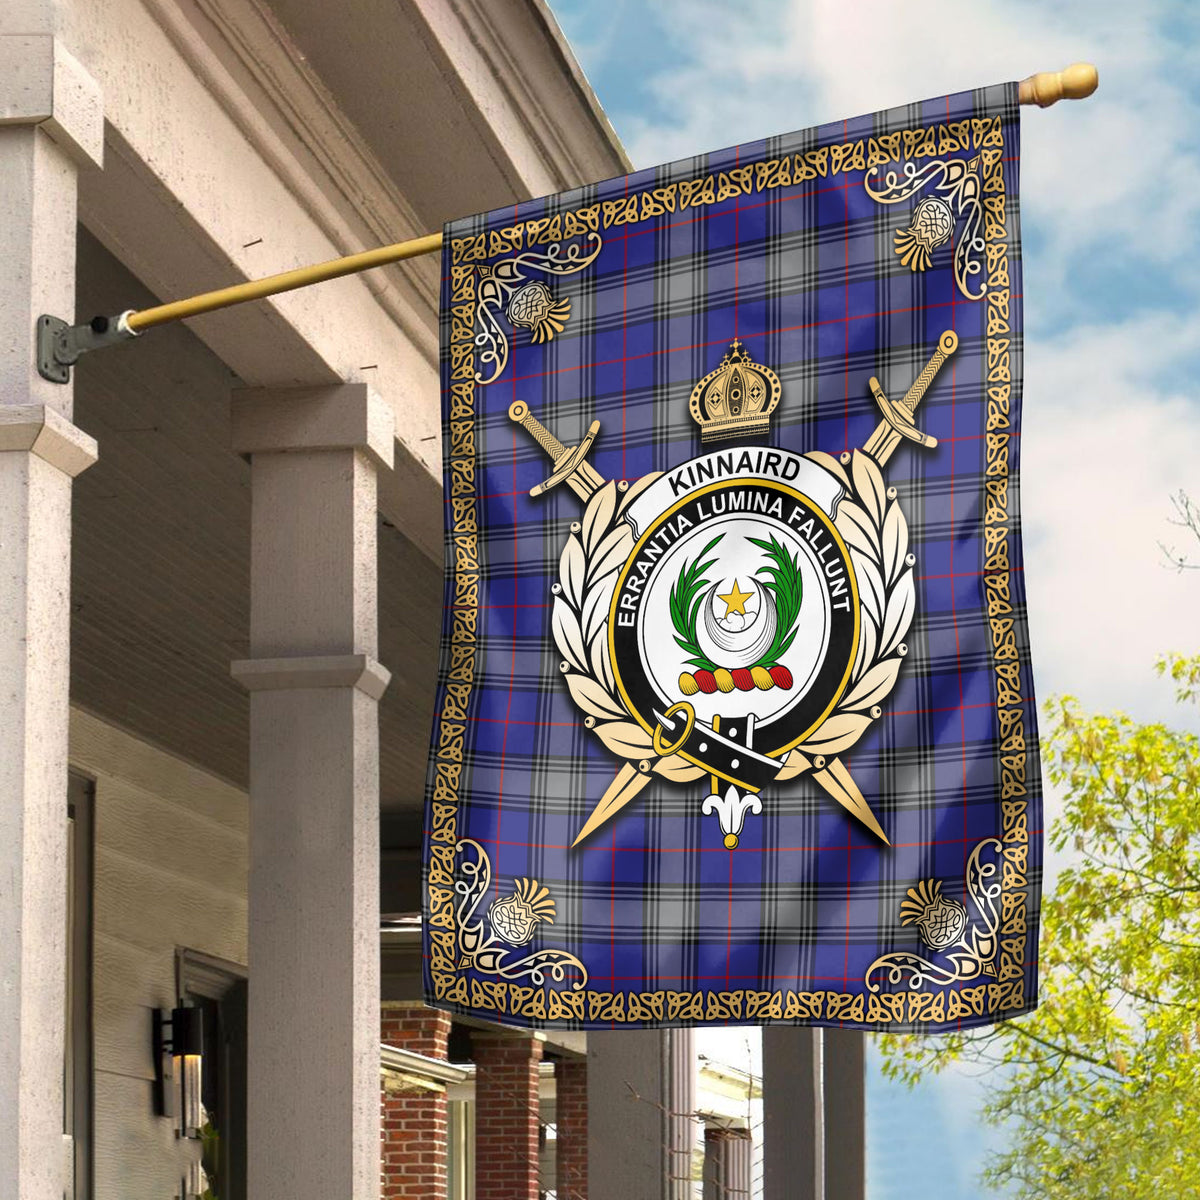 Kinnaird Tartan Crest Garden Flag - Celtic Thistle Style